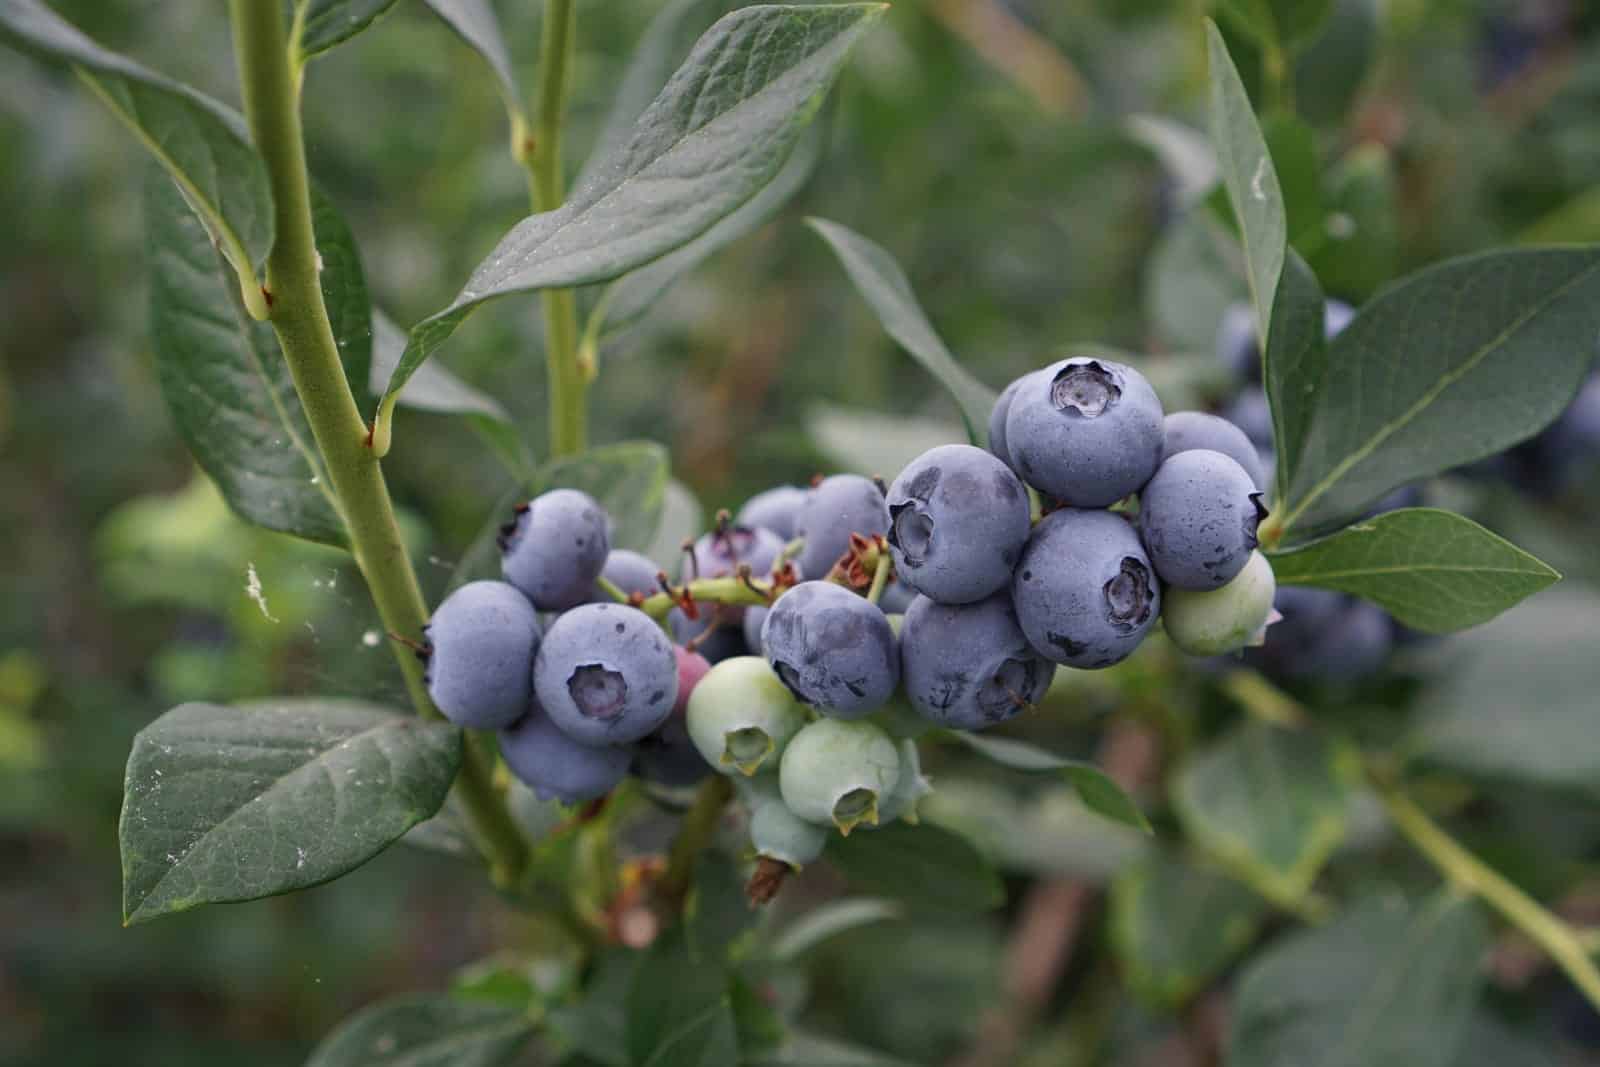 Bird Netting for Blueberry Bushes: How To Keep Birds Away - Harvestofarming